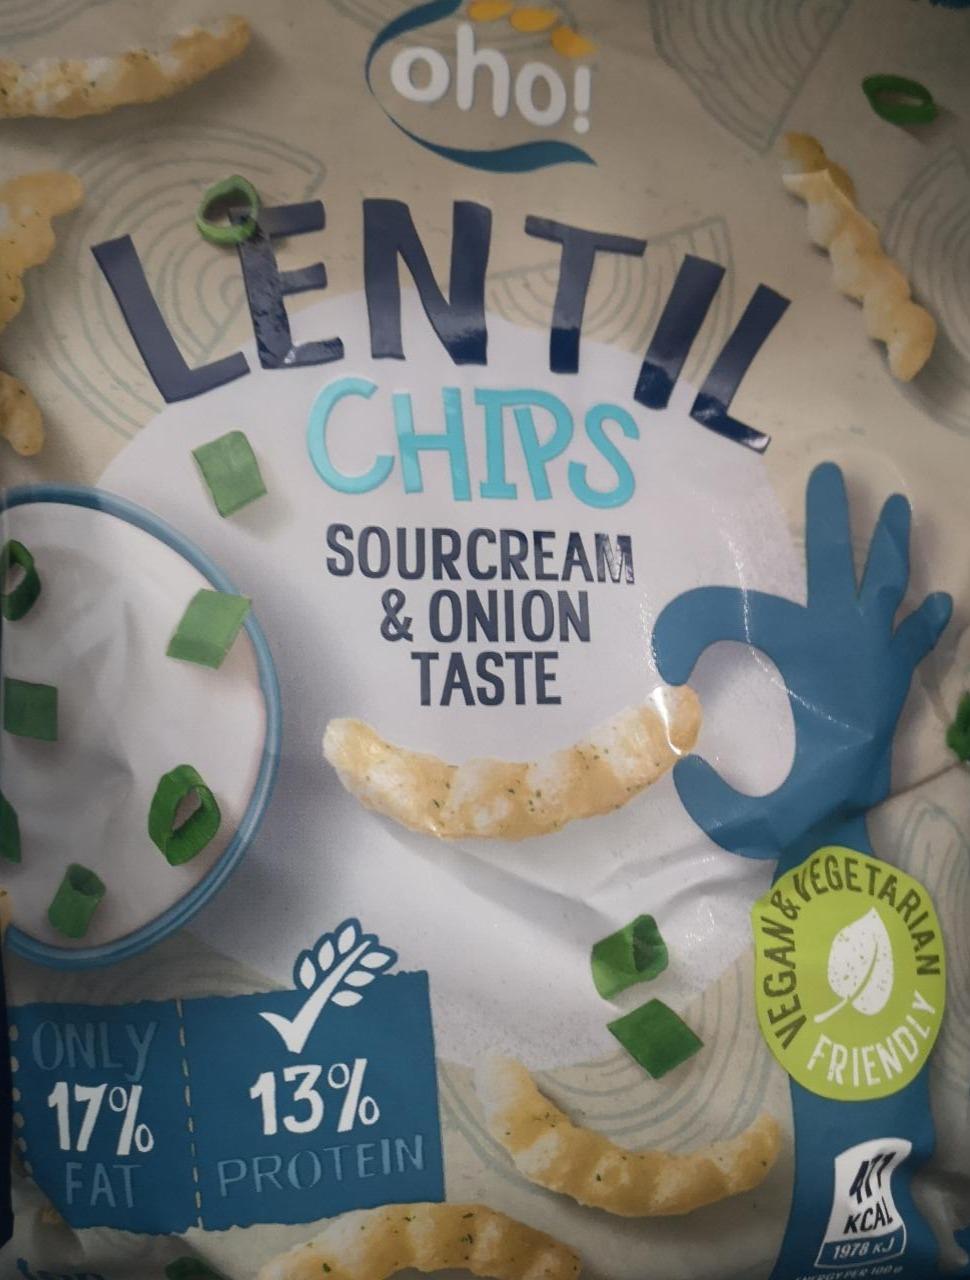 Zdjęcia - oho! Lentil Chips Sourcream onion taste